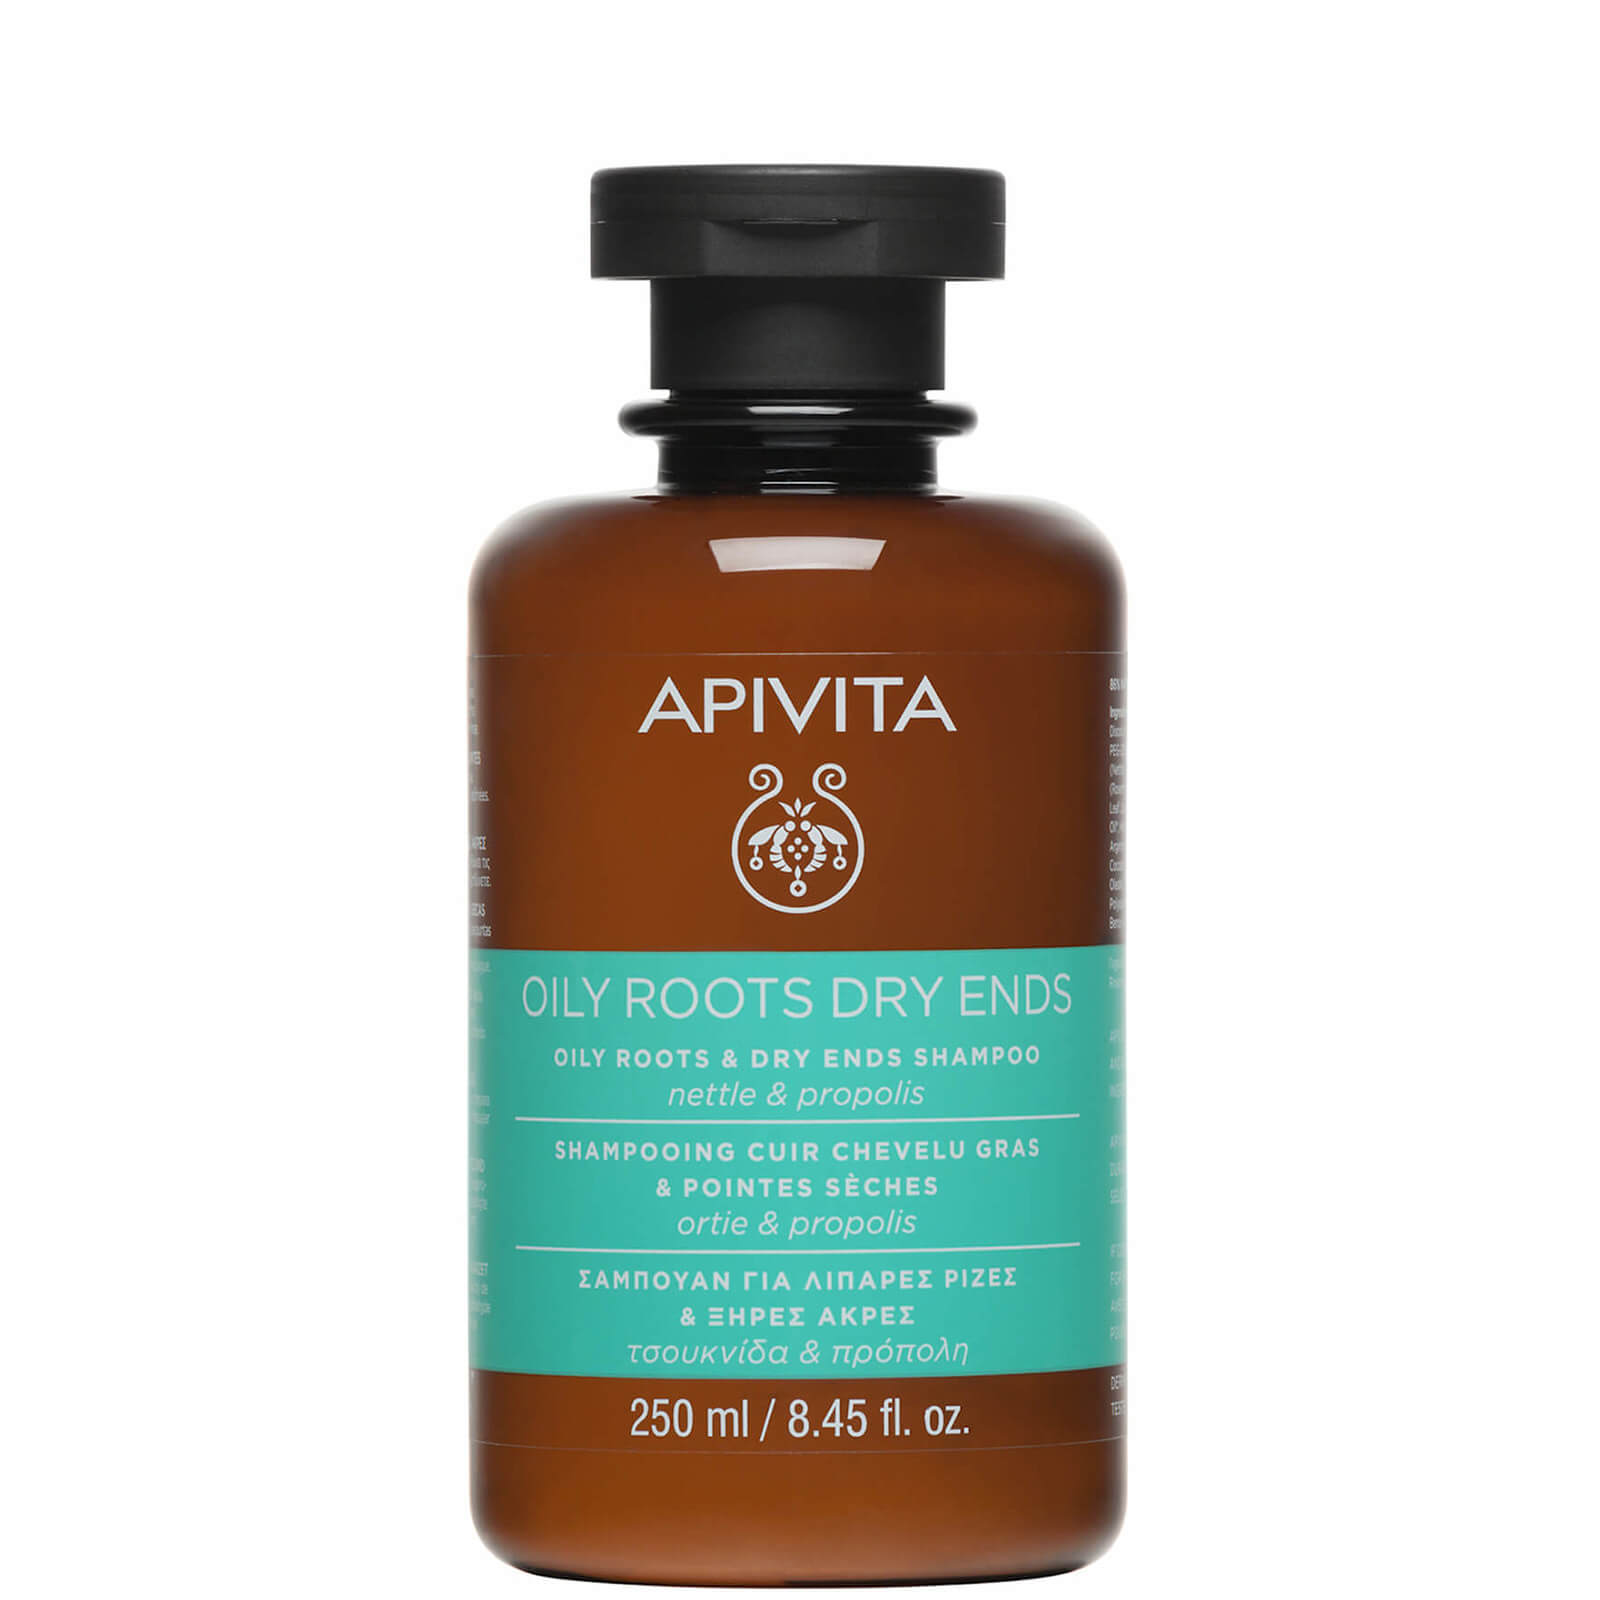 APIVITA 全面护发系列油性发根及干性发尾用洗发水 250ml | 荨麻和蜂胶